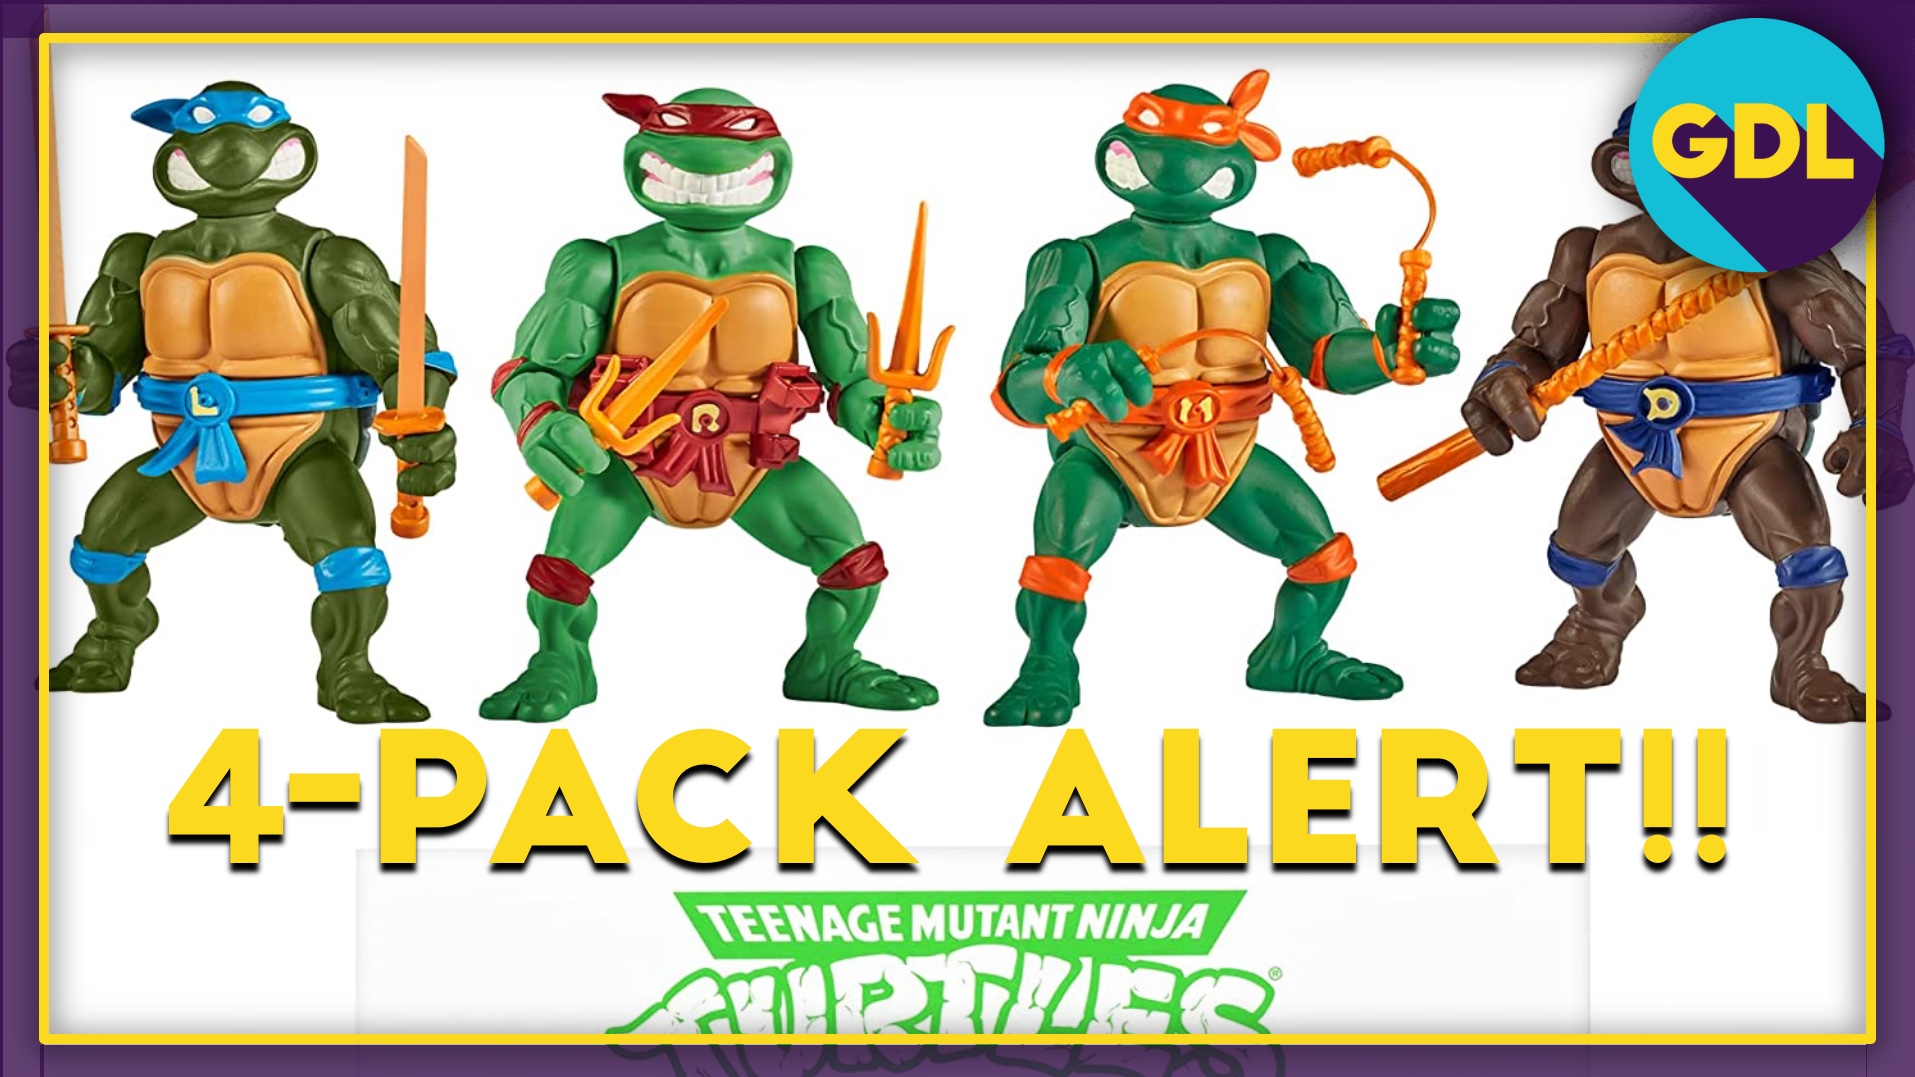 Teenage Mutant Ninja Turtles TMNT Classics Donatello Action Figure (with  Storage Shell)